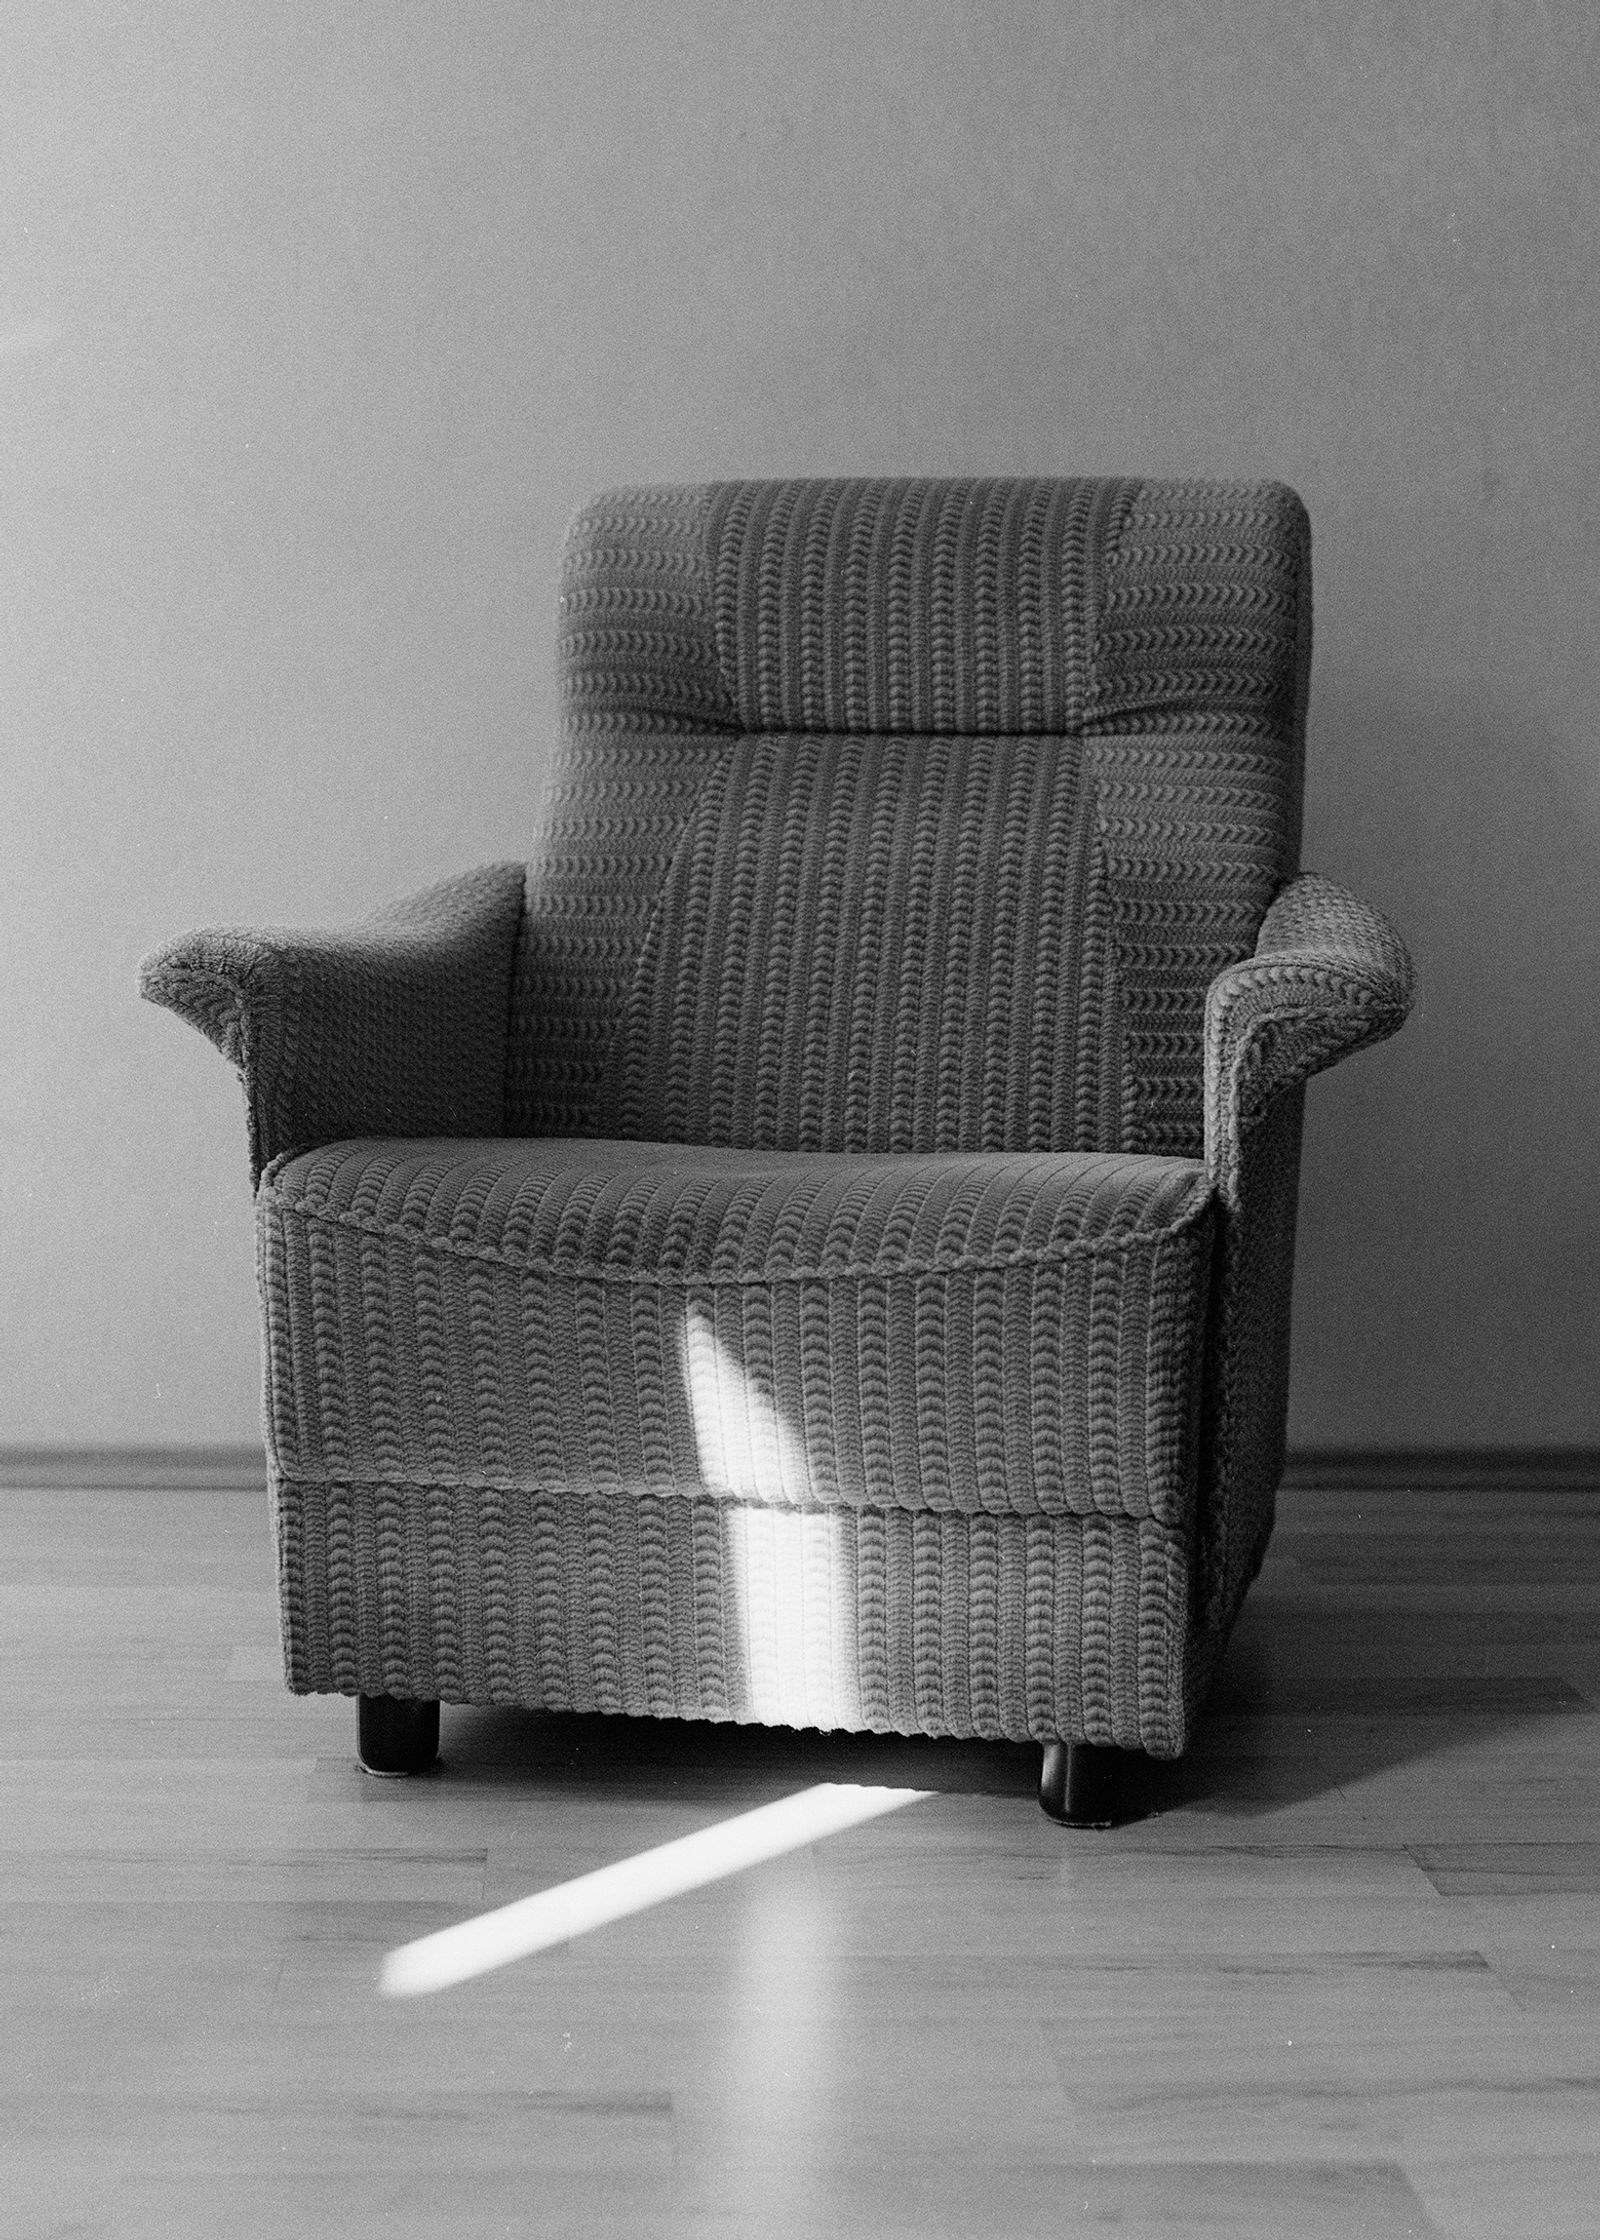 © Elsa Gregersdotter - The armchair